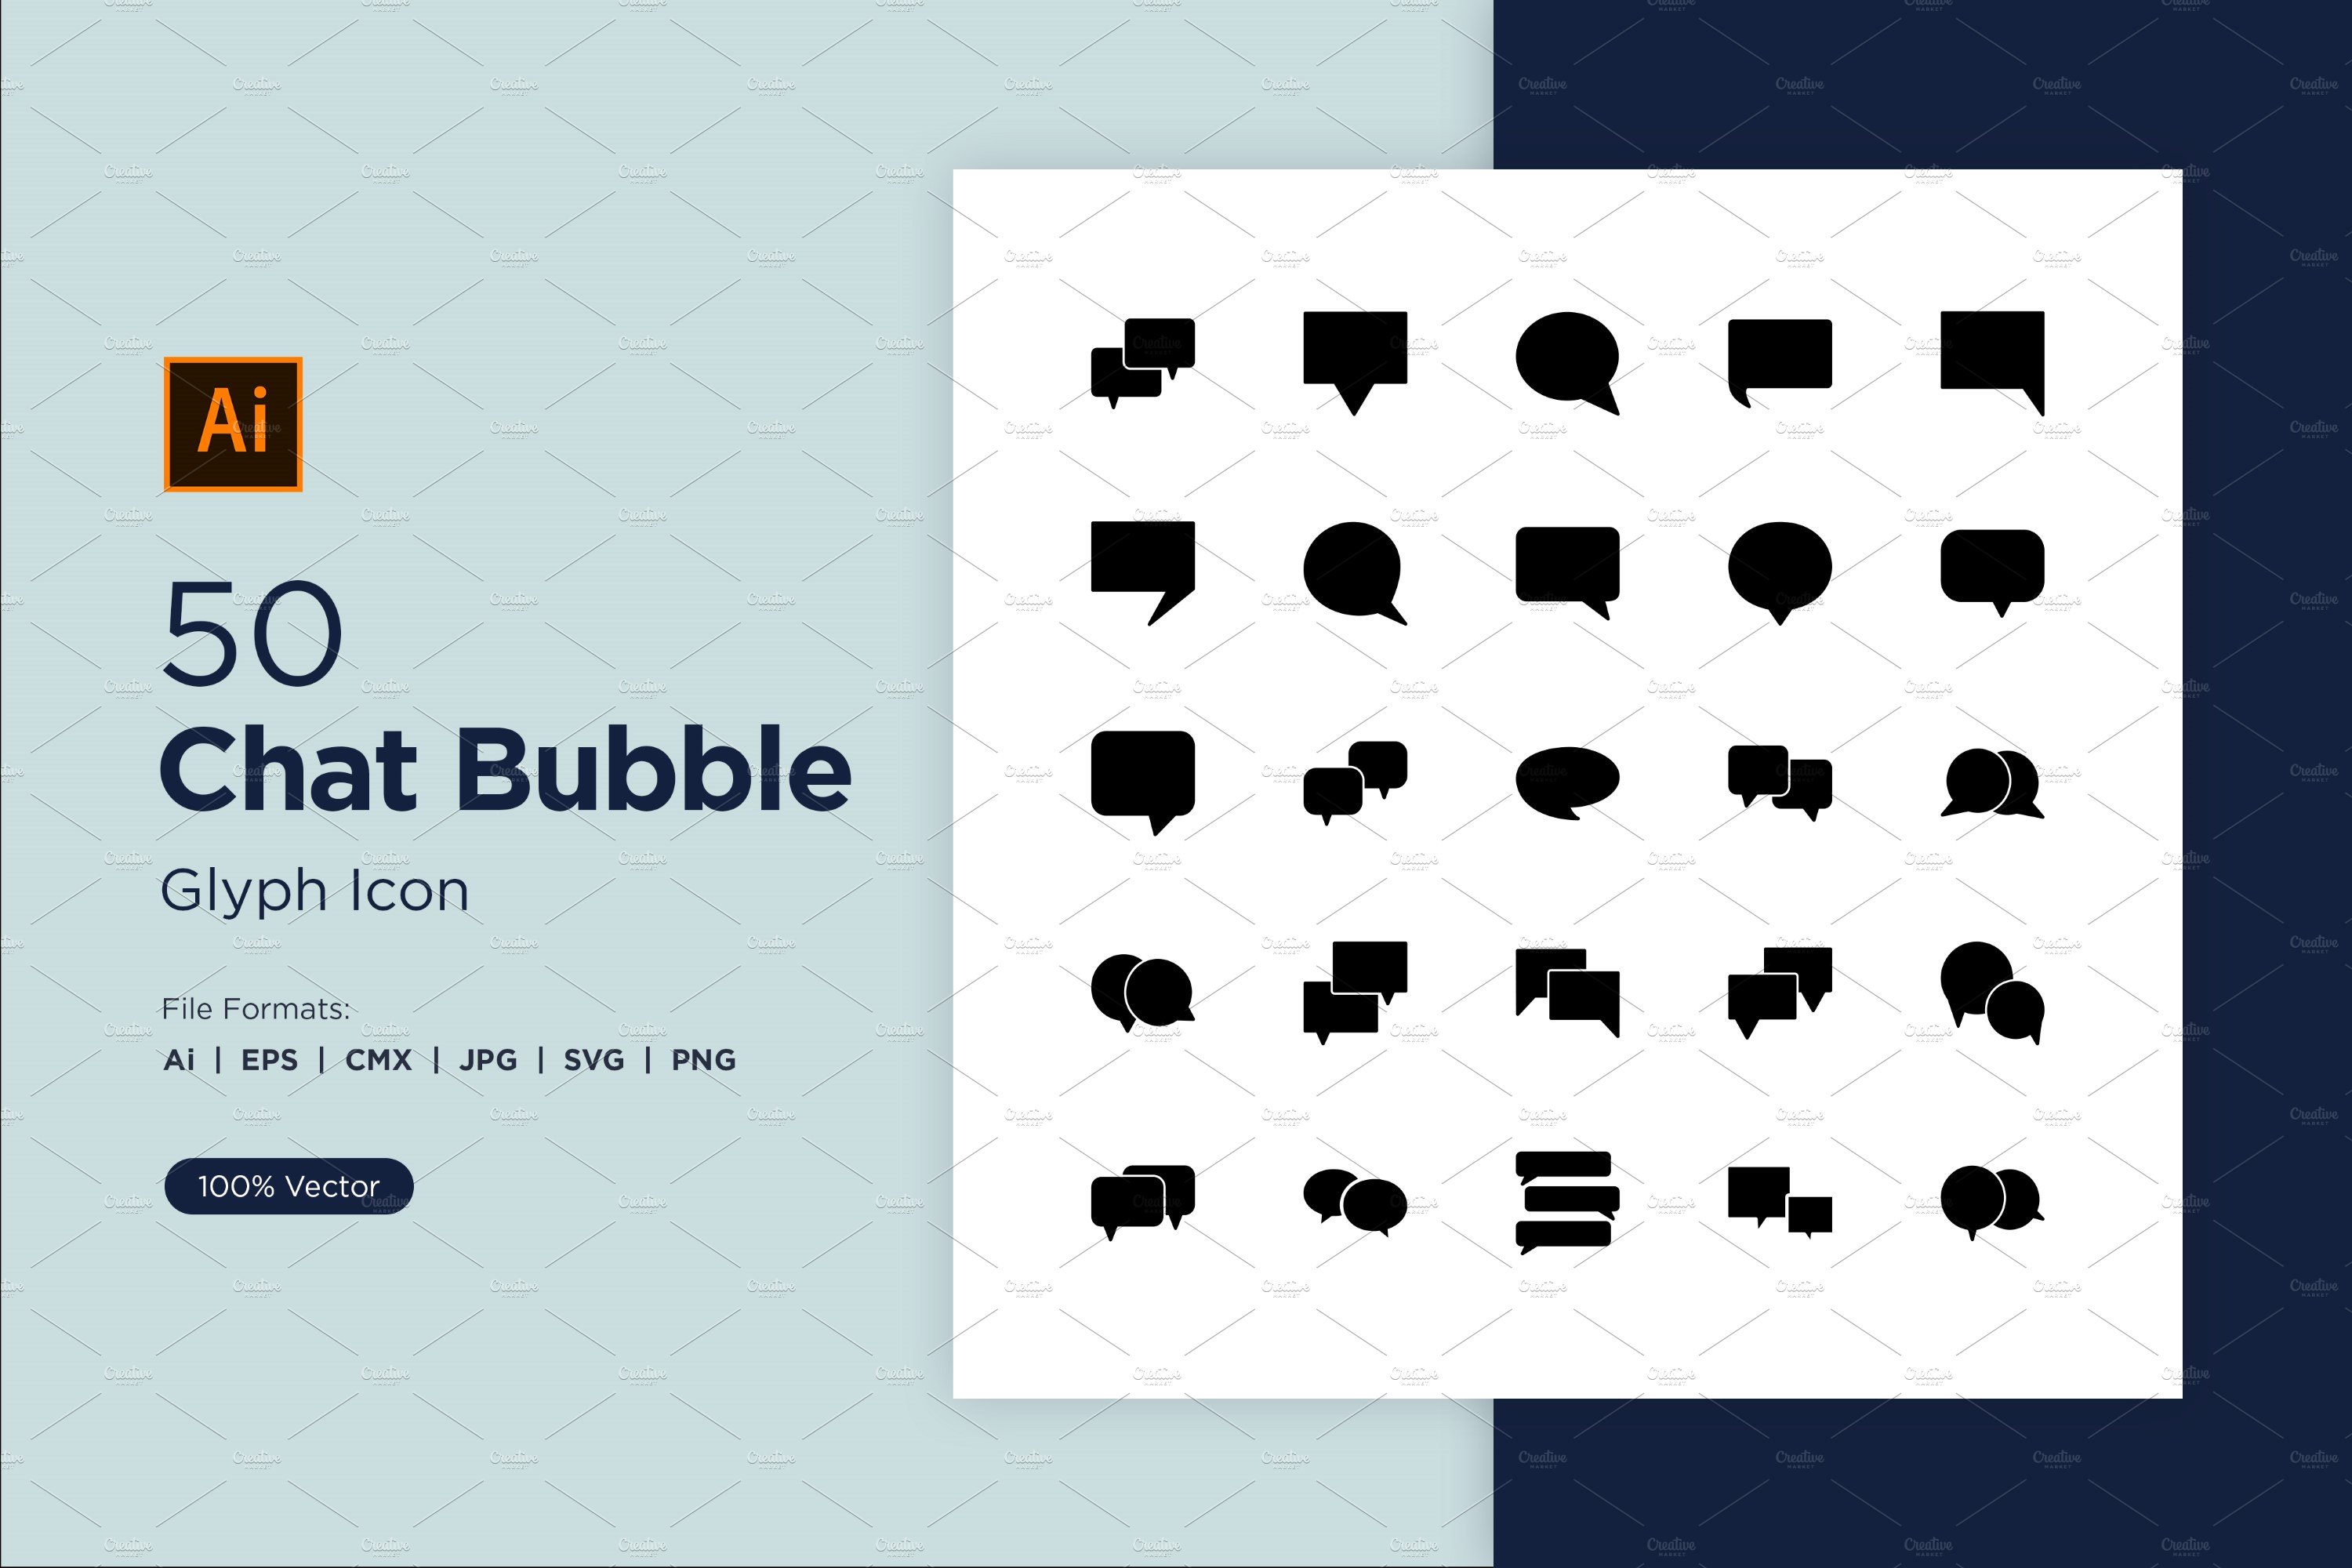 50 Speech Bubble Glyph Icon cover image.